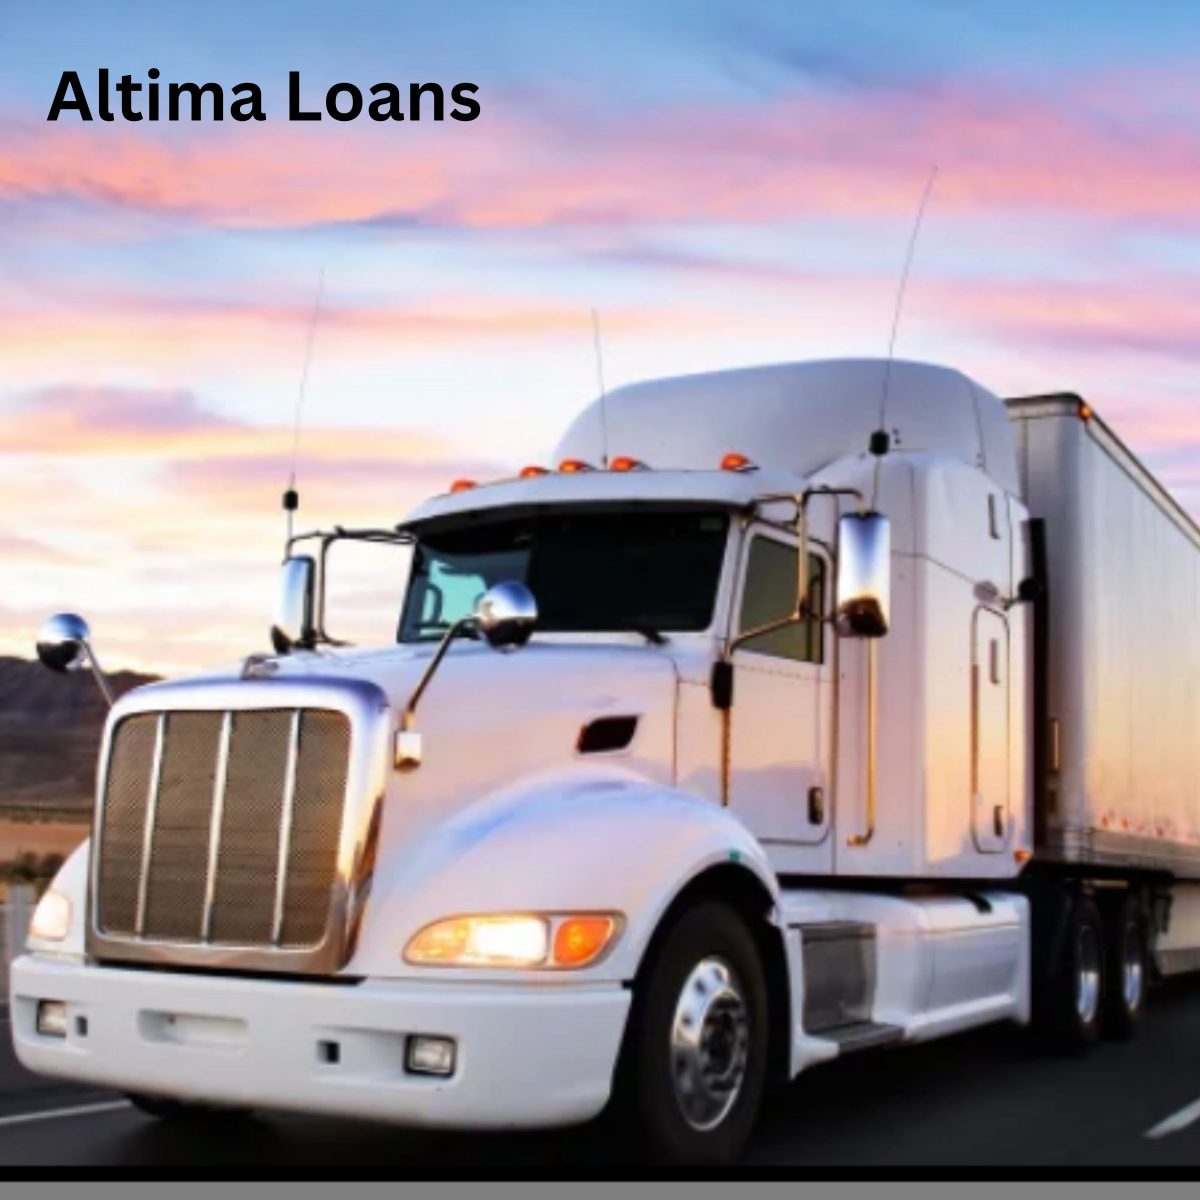 Altima Loans